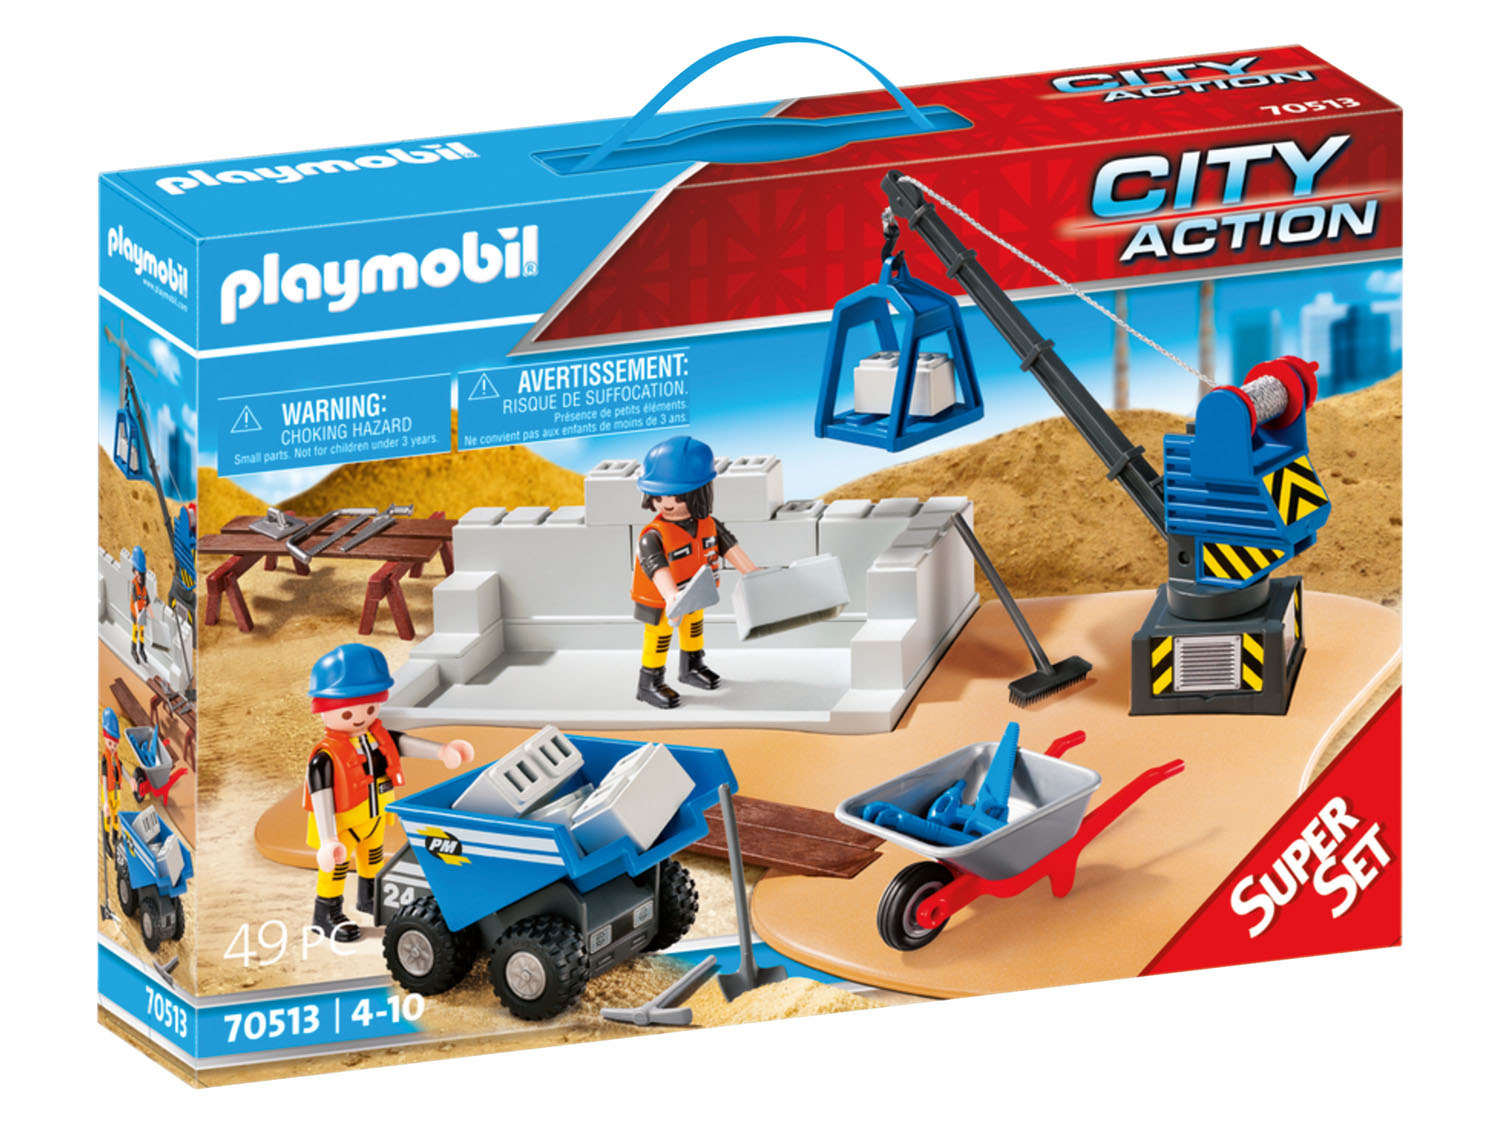 Playmobil Großes u.v.m. 2 Figuren inklusive Spielset